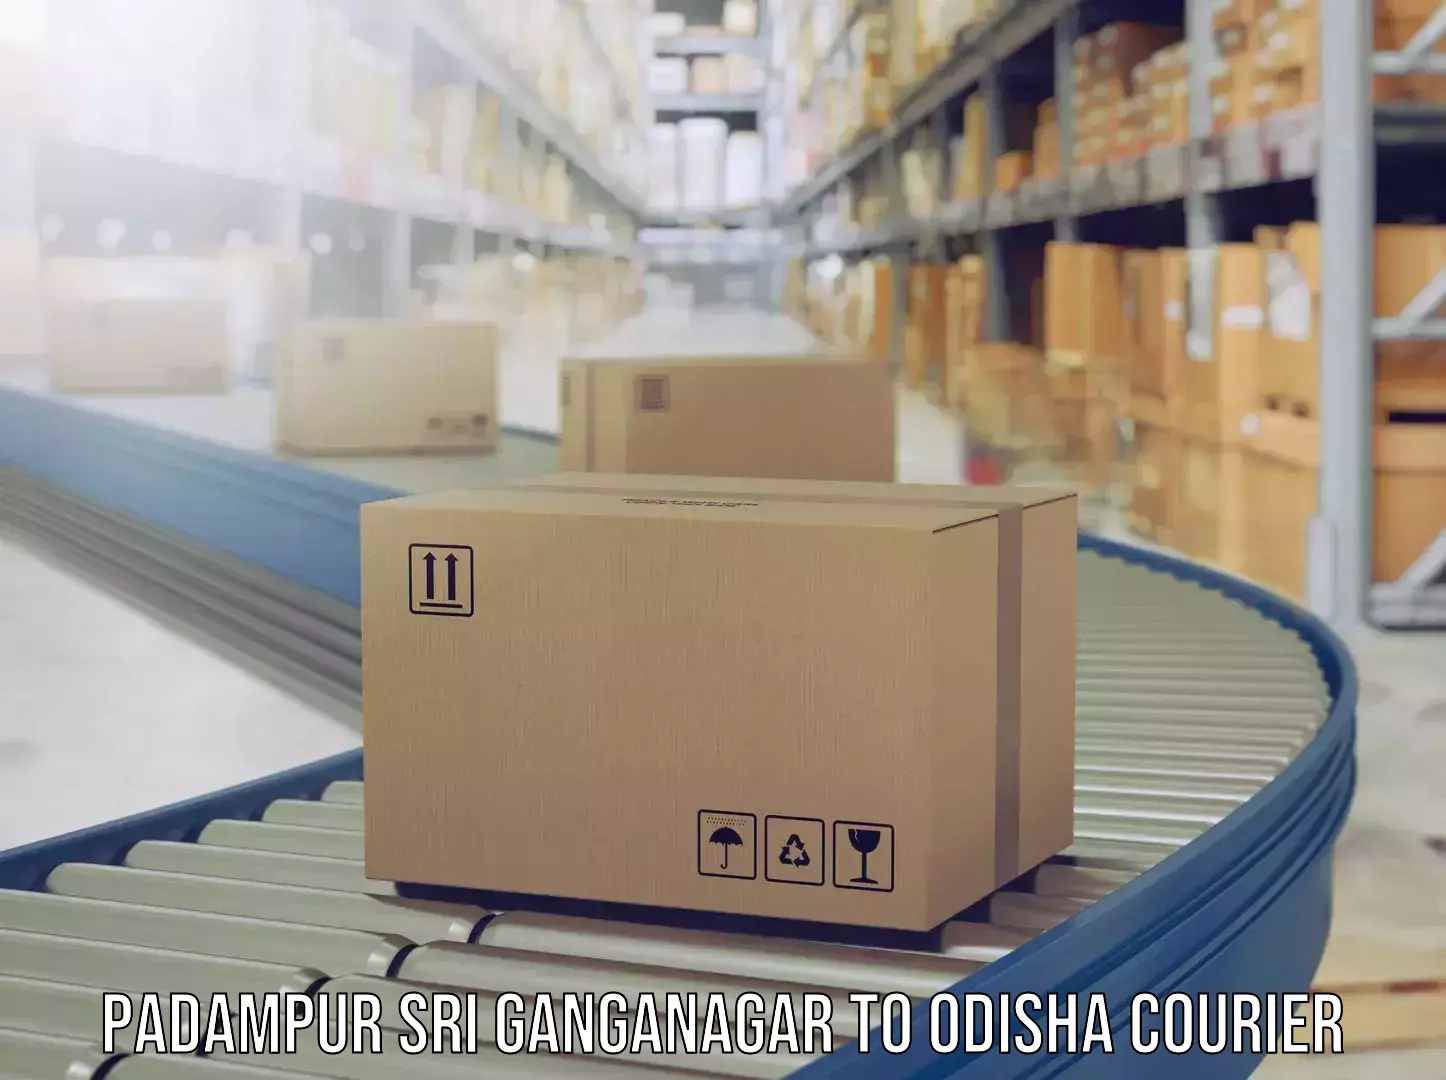 Luggage delivery network Padampur Sri Ganganagar to Paradip Port